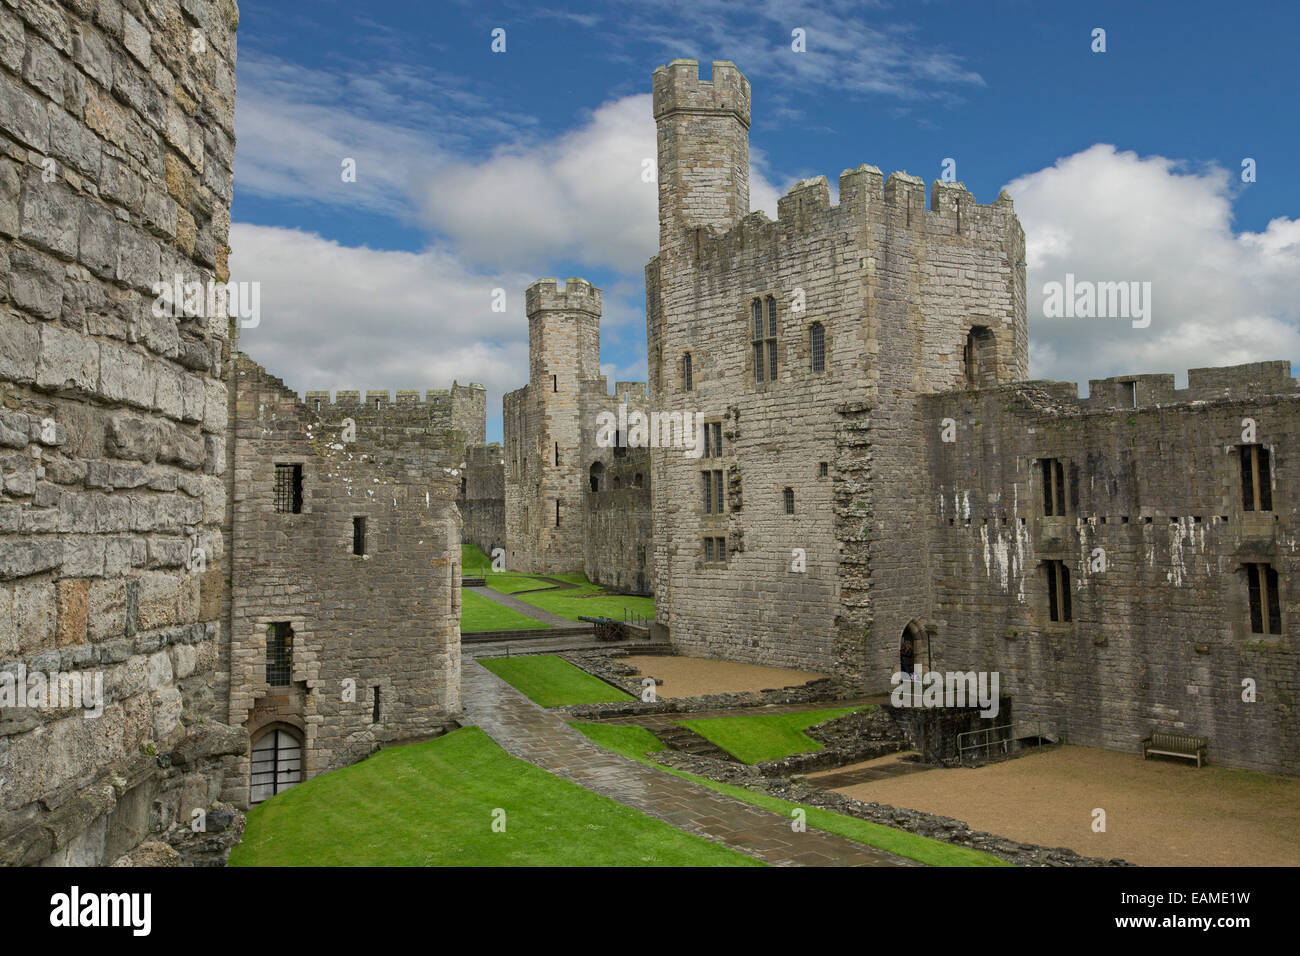 Spectacular Interior Of 13th Century Caernarfon Castle With